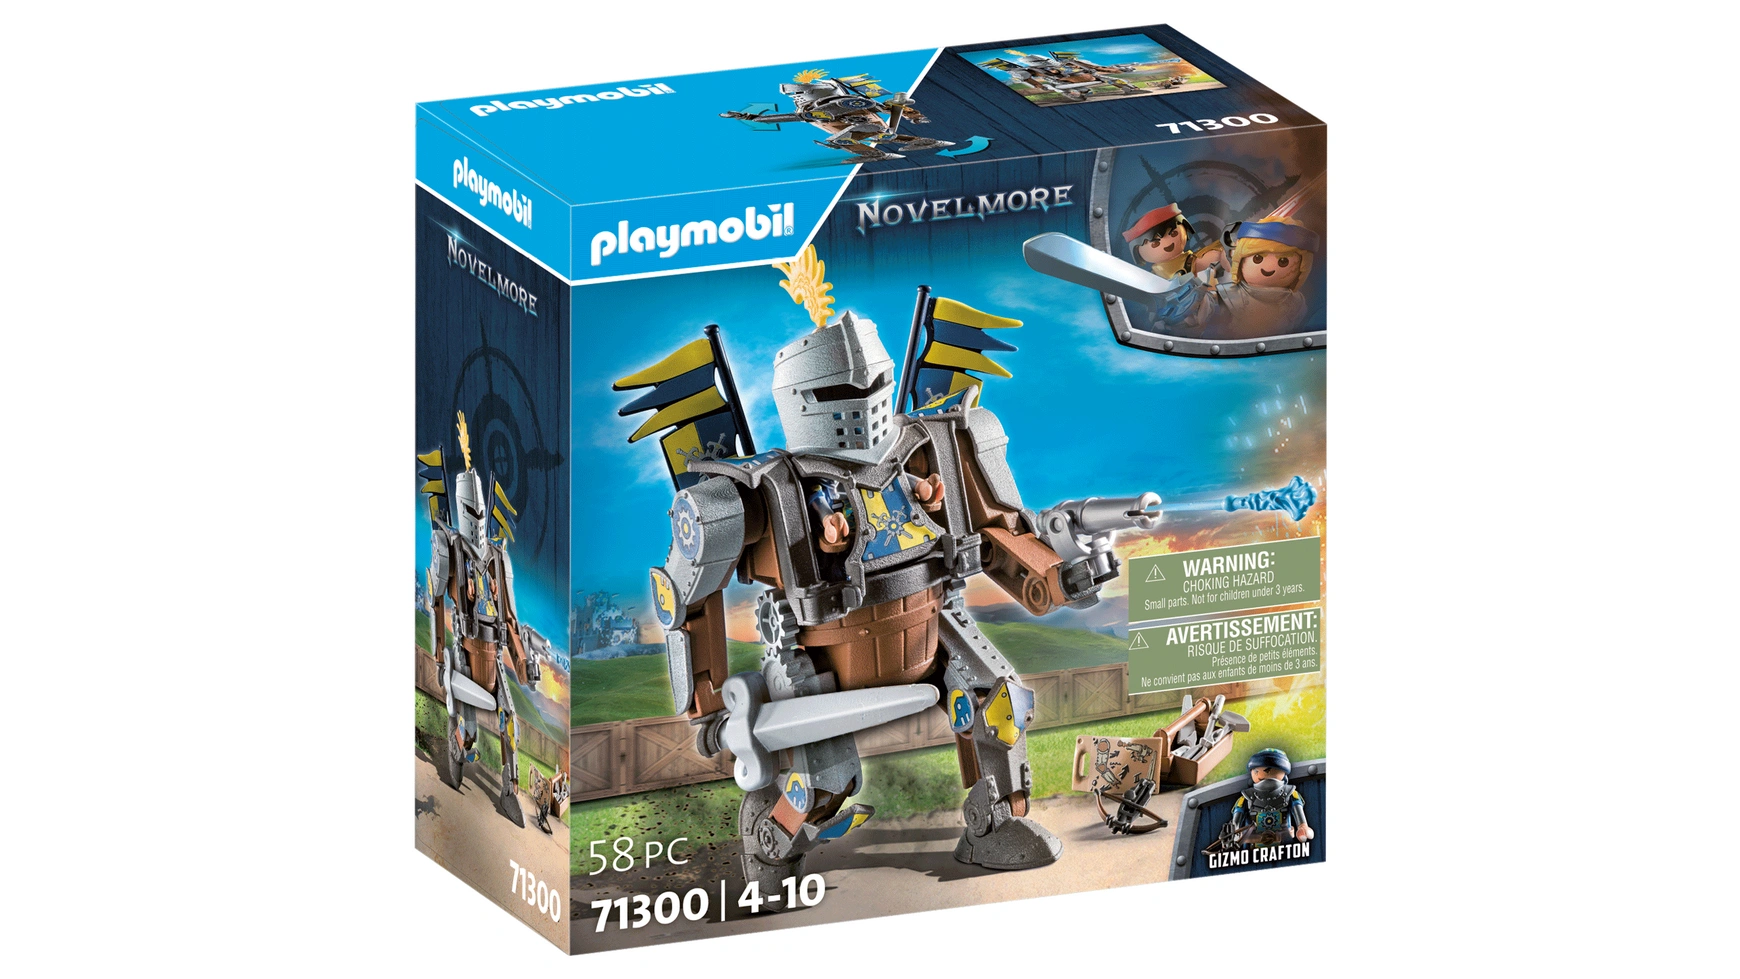 Novelmore боевой робот Playmobil